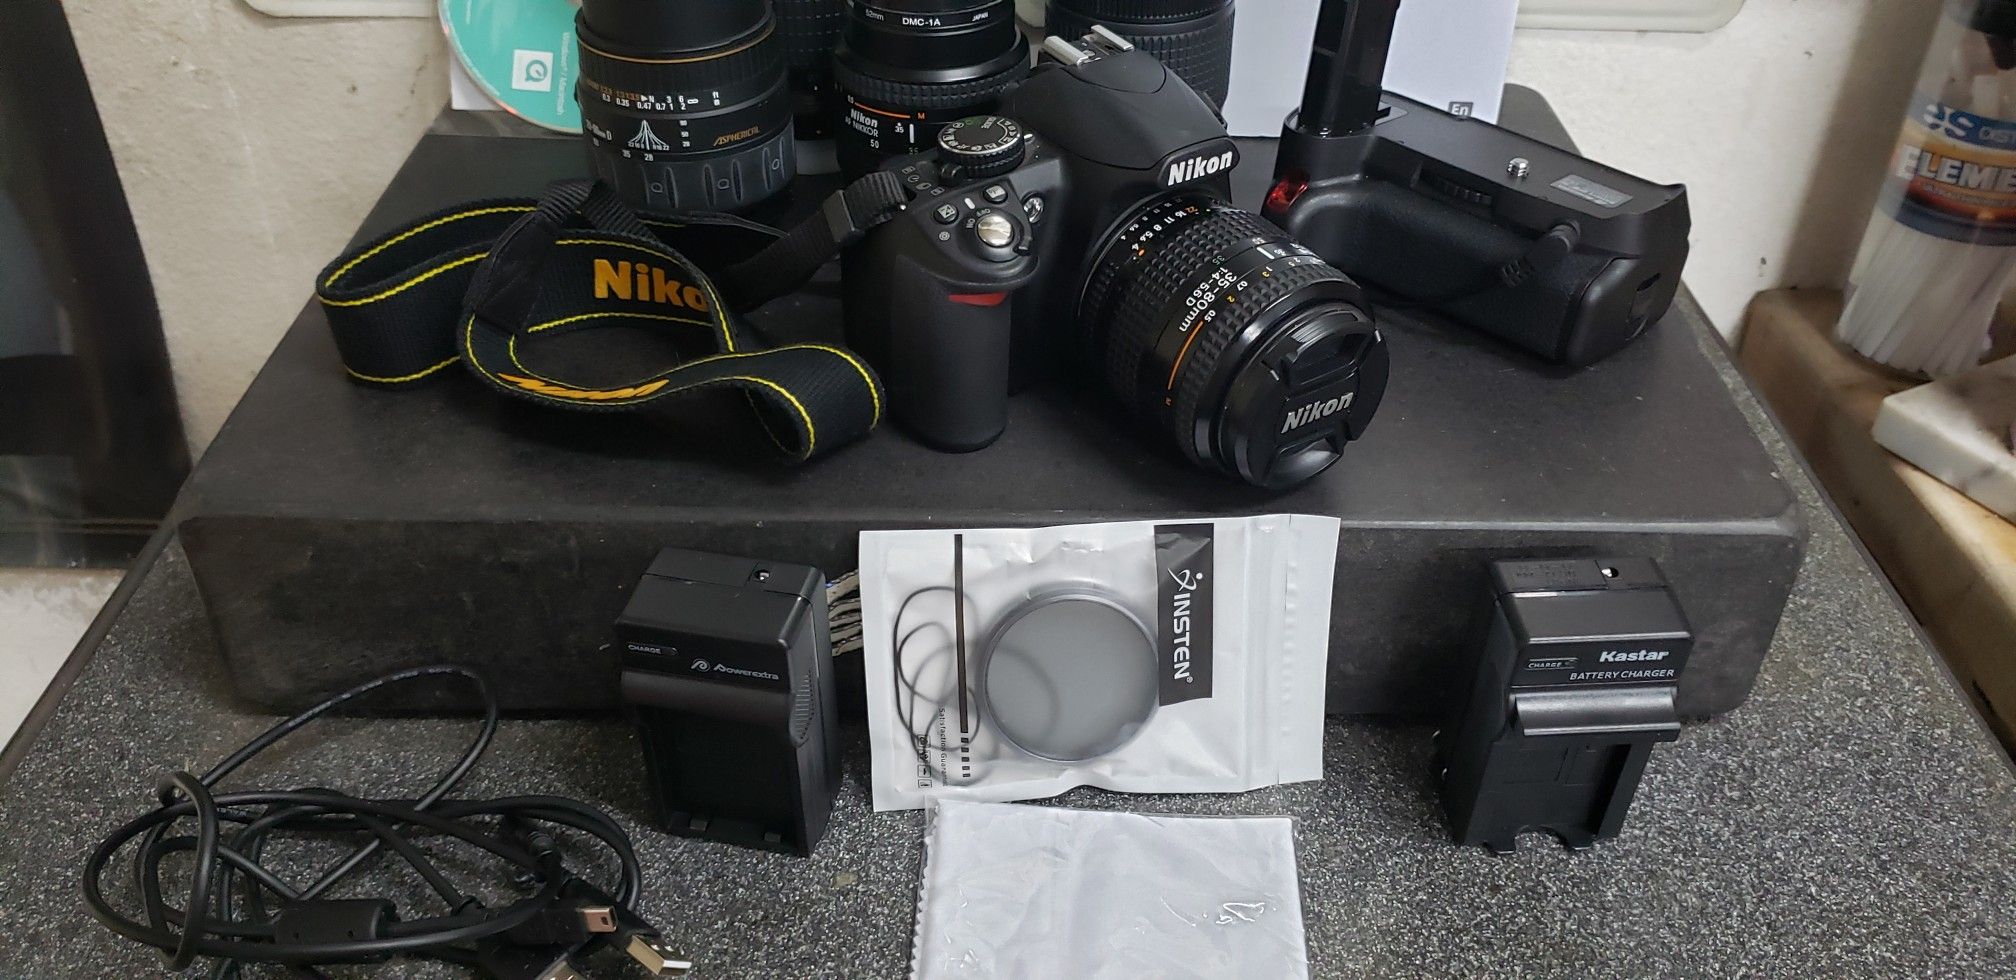 Nikon D3100 Camera Package